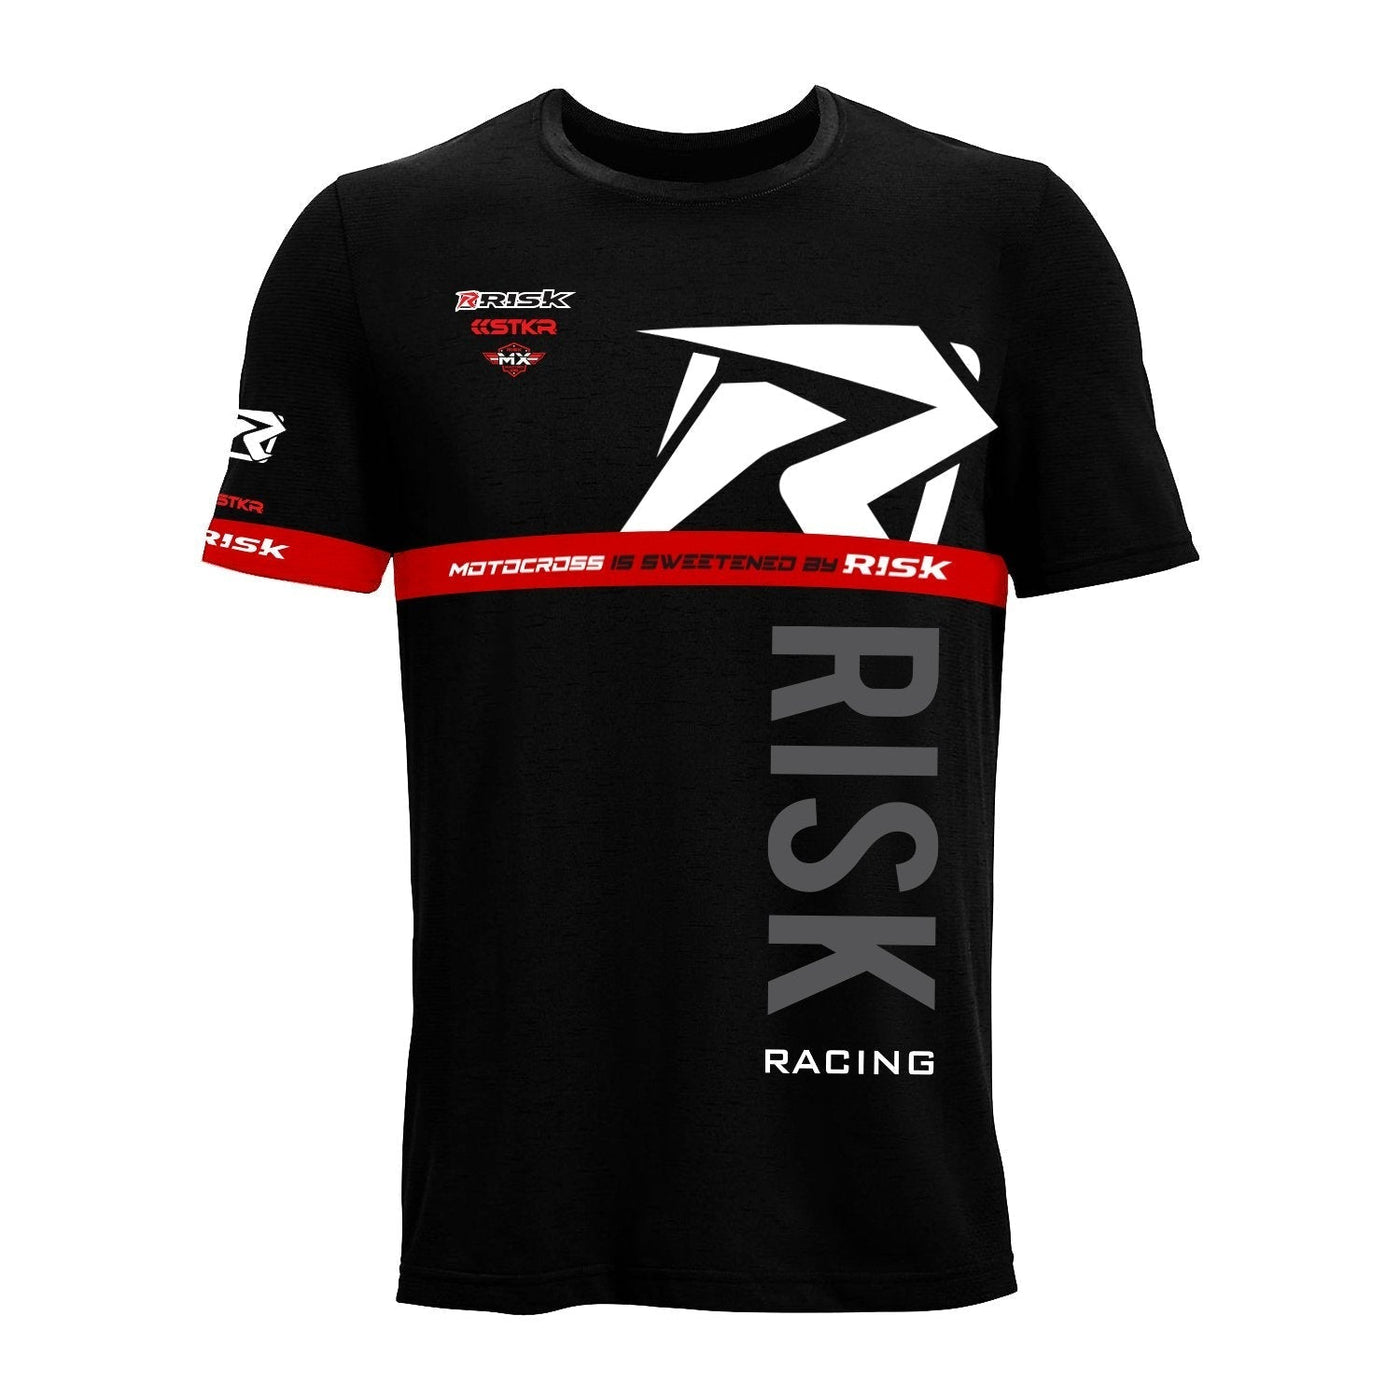 Risk Racing Premium Athletic T Shirt, Black / Red, Large